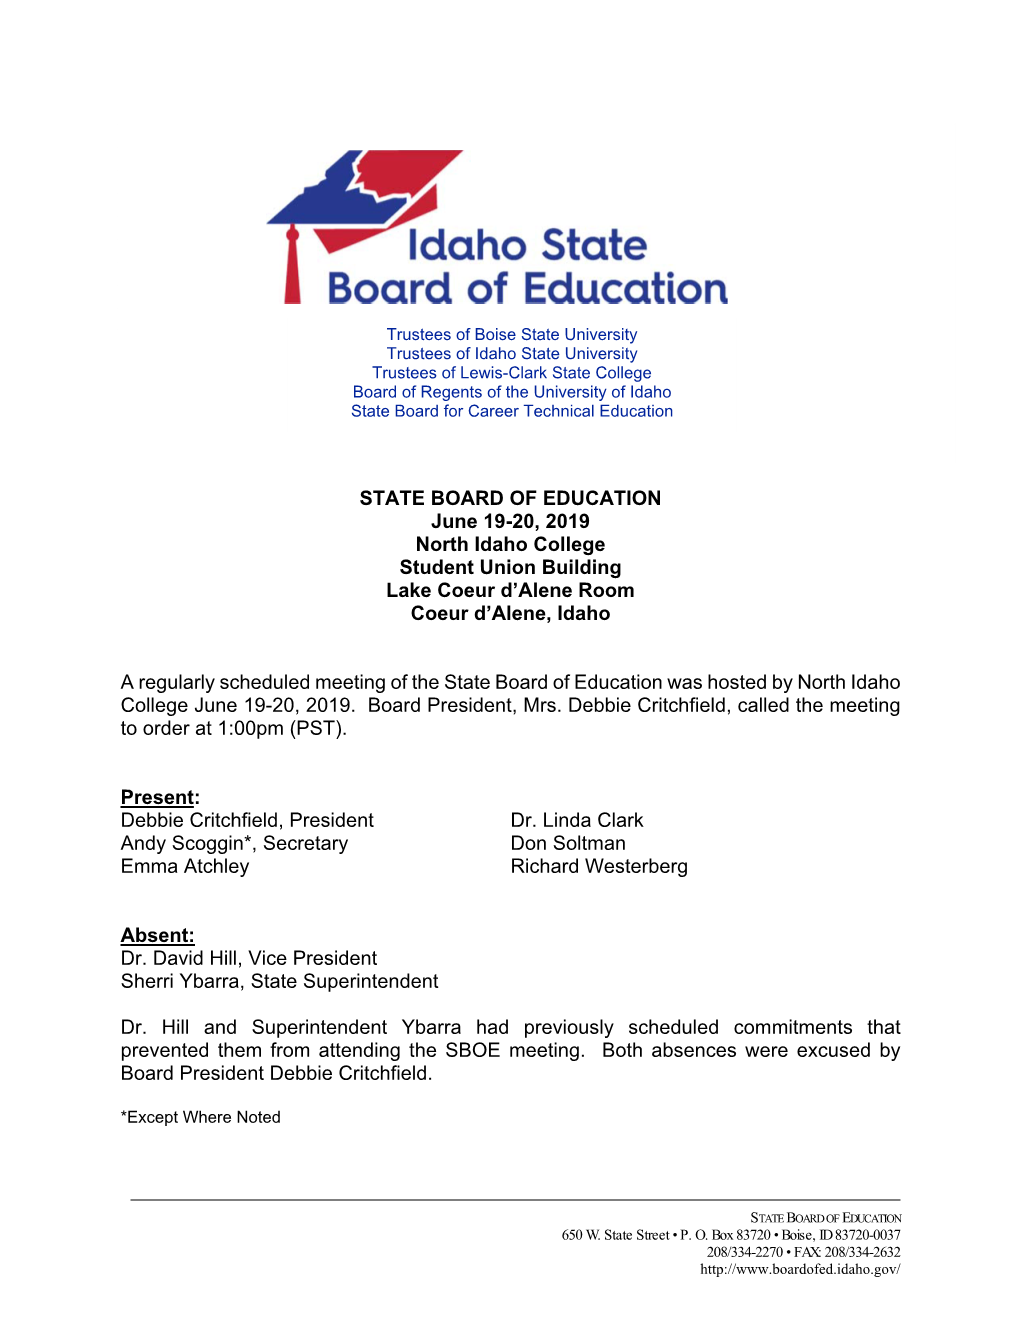 STATE BOARD of EDUCATION June 19-20, 2019 North Idaho College Student Union Building Lake Coeur D’Alene Room Coeur D’Alene, Idaho